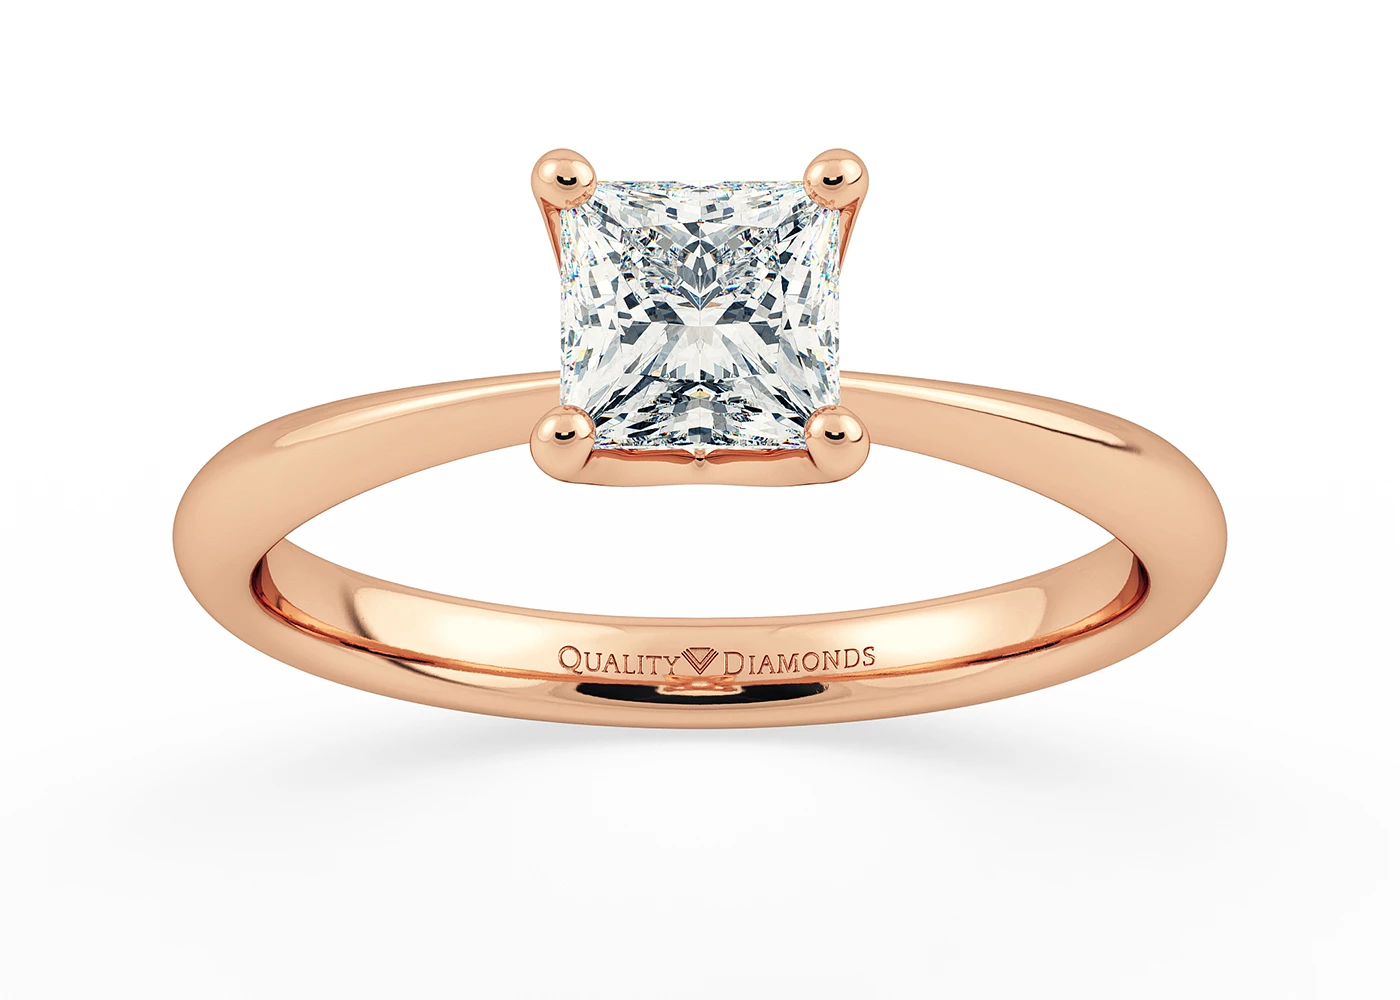 Princess Amorette Diamond Ring in 9K Rose Gold